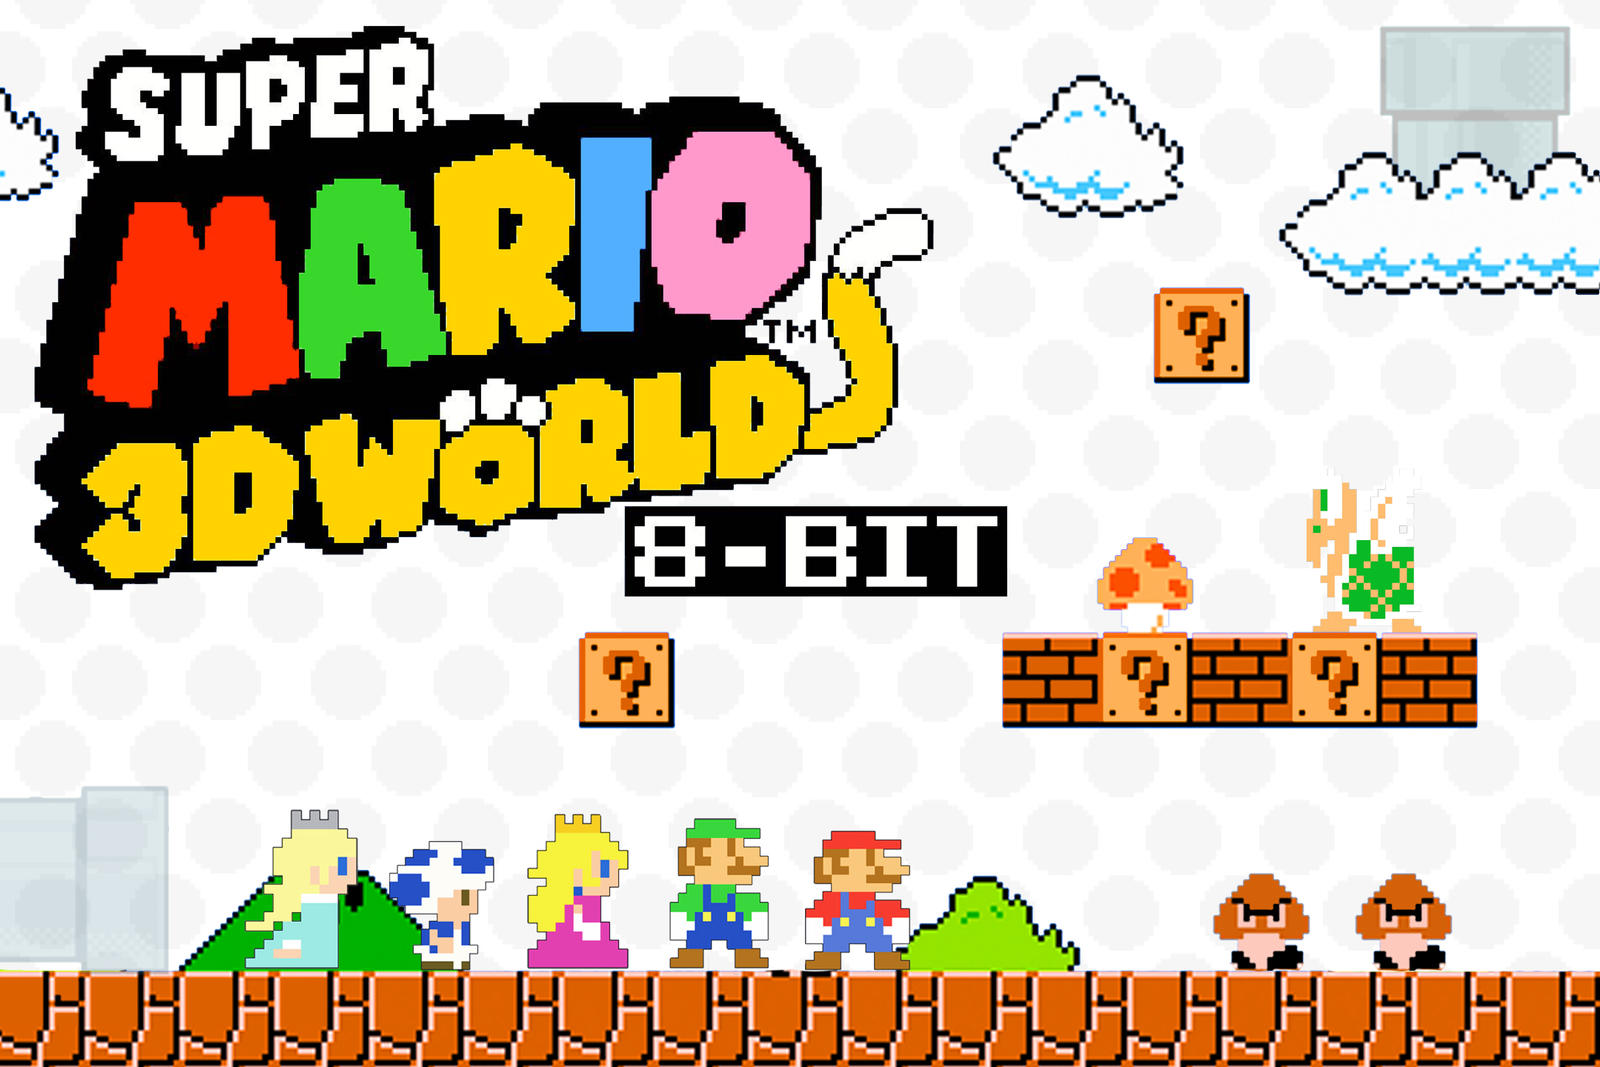 Mario bros 8. Super Mario 8 бит. Супер Марио БРОС 8 бит. Super Mario World. Супер Марио 3.